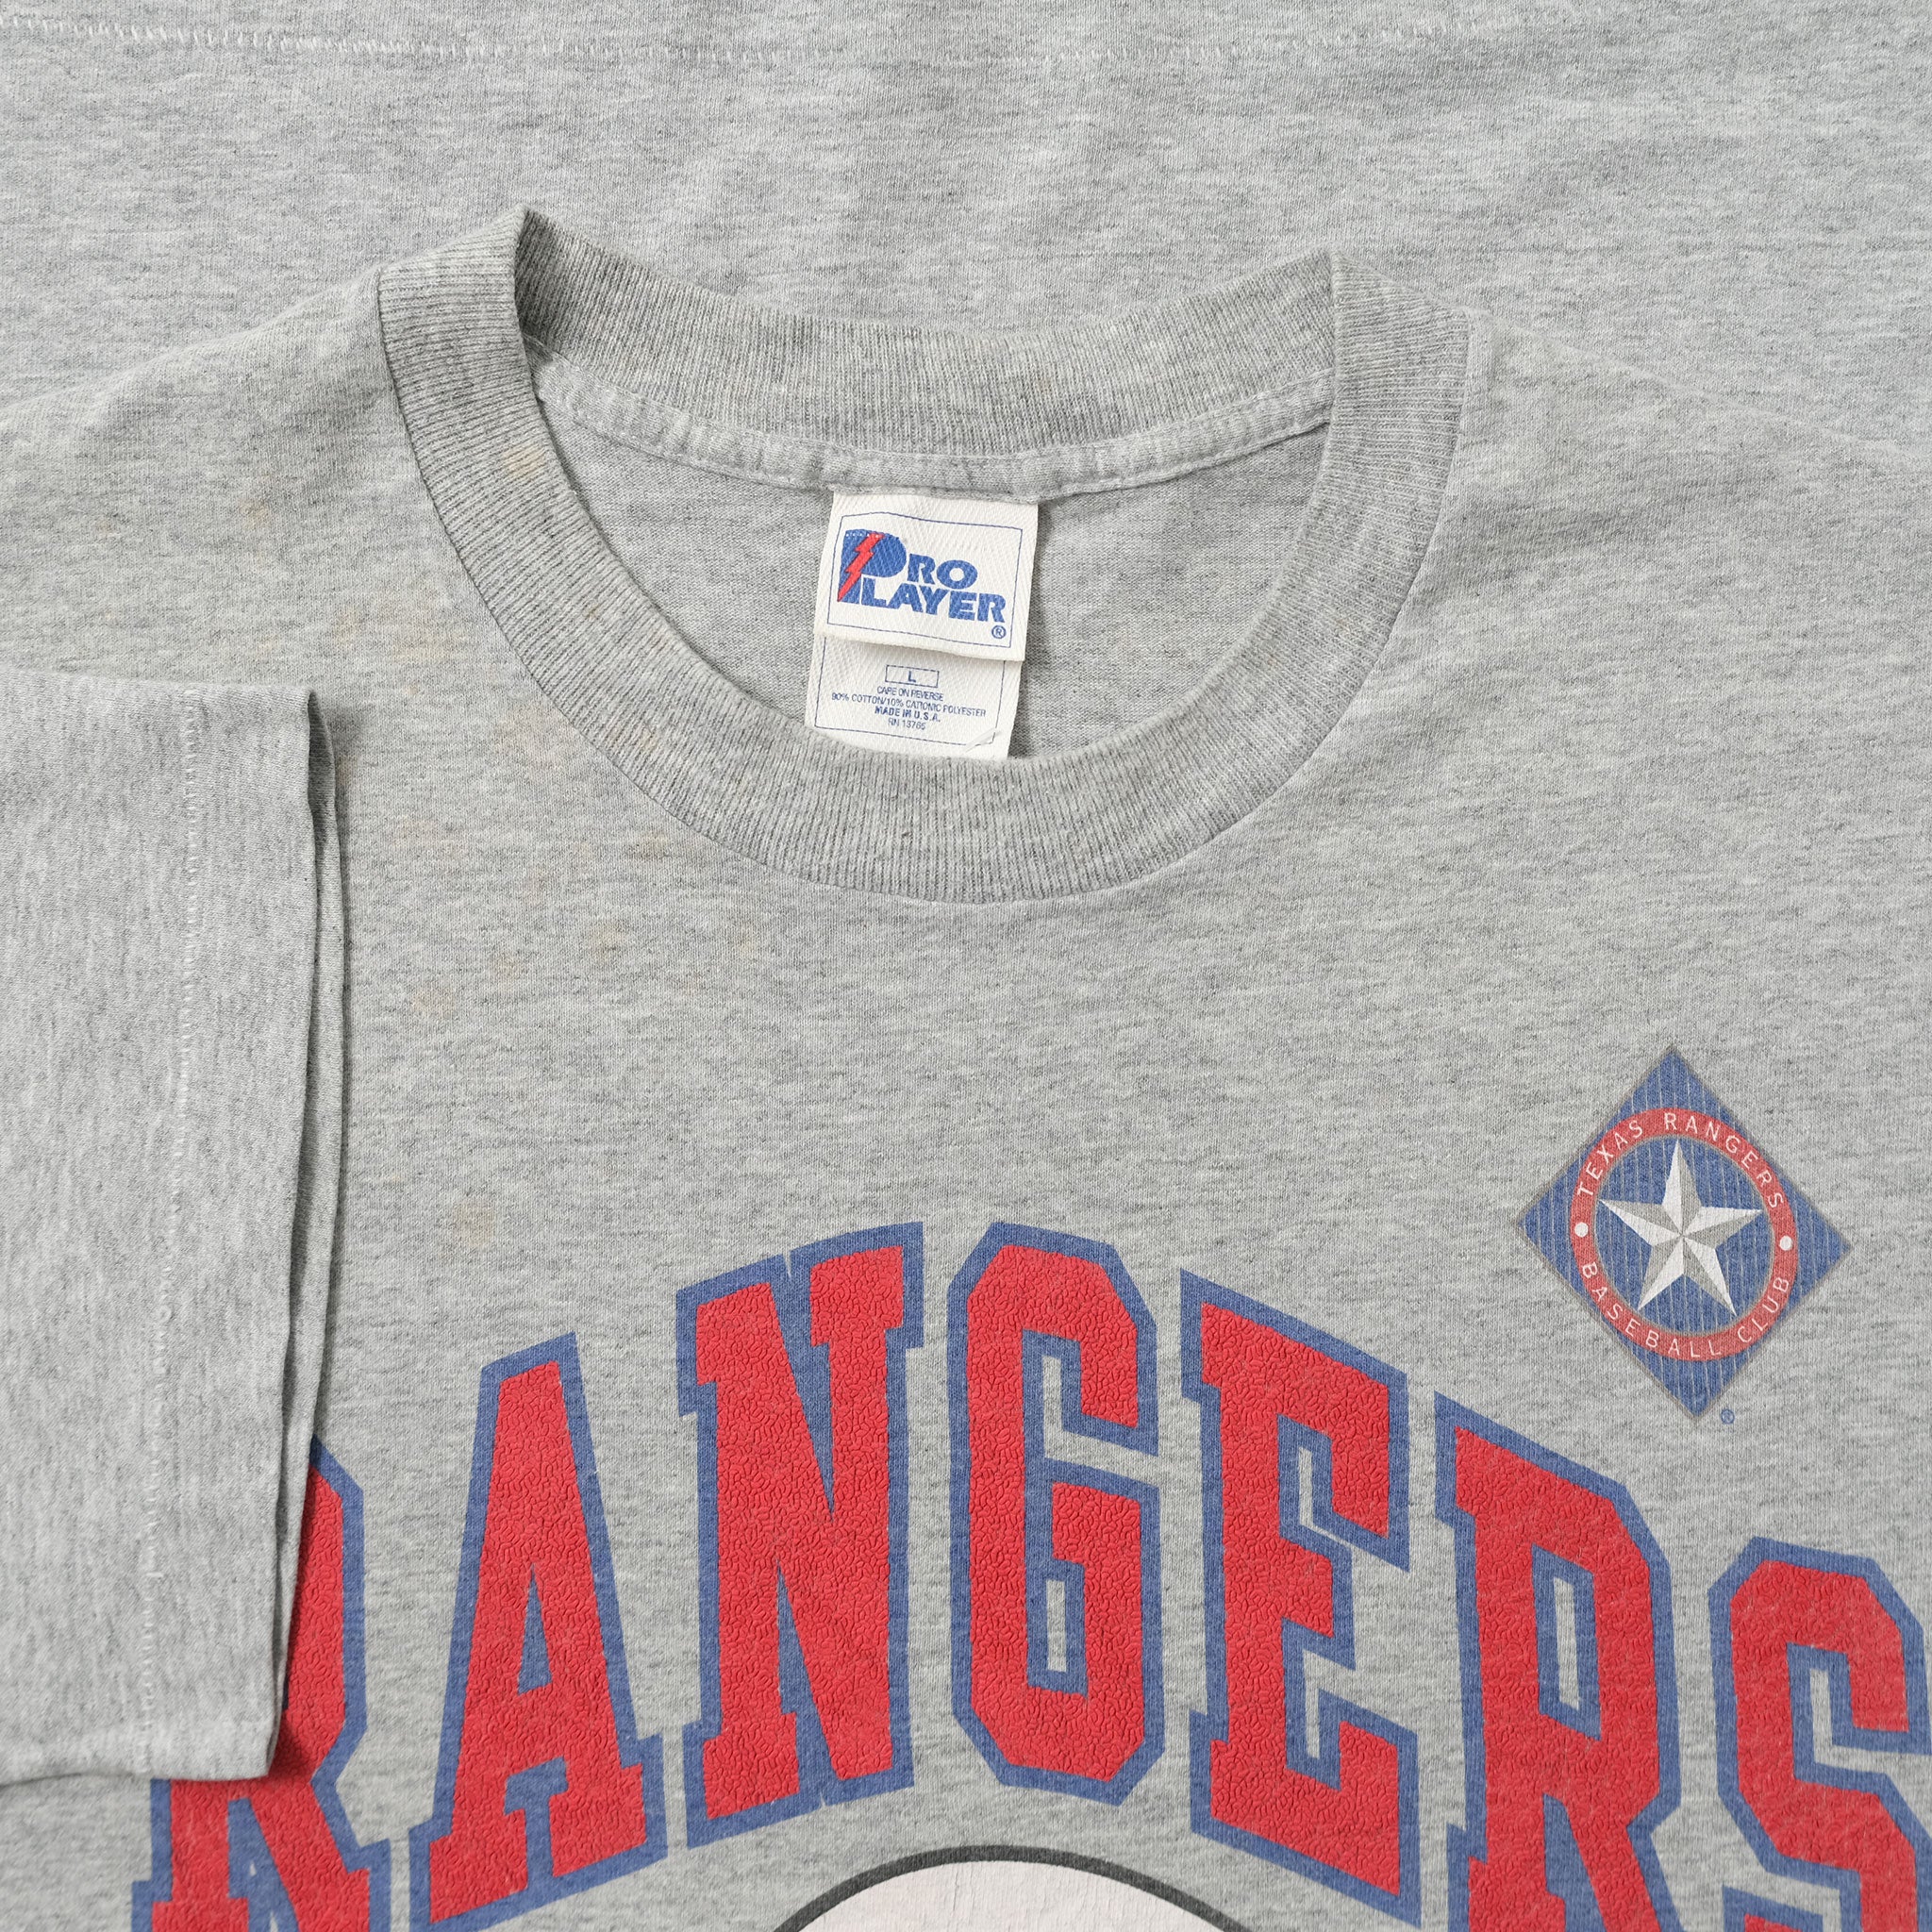 Vintage Texas EST 1835 T-Shirt, Texas Rangers Shirt - Printing Ooze